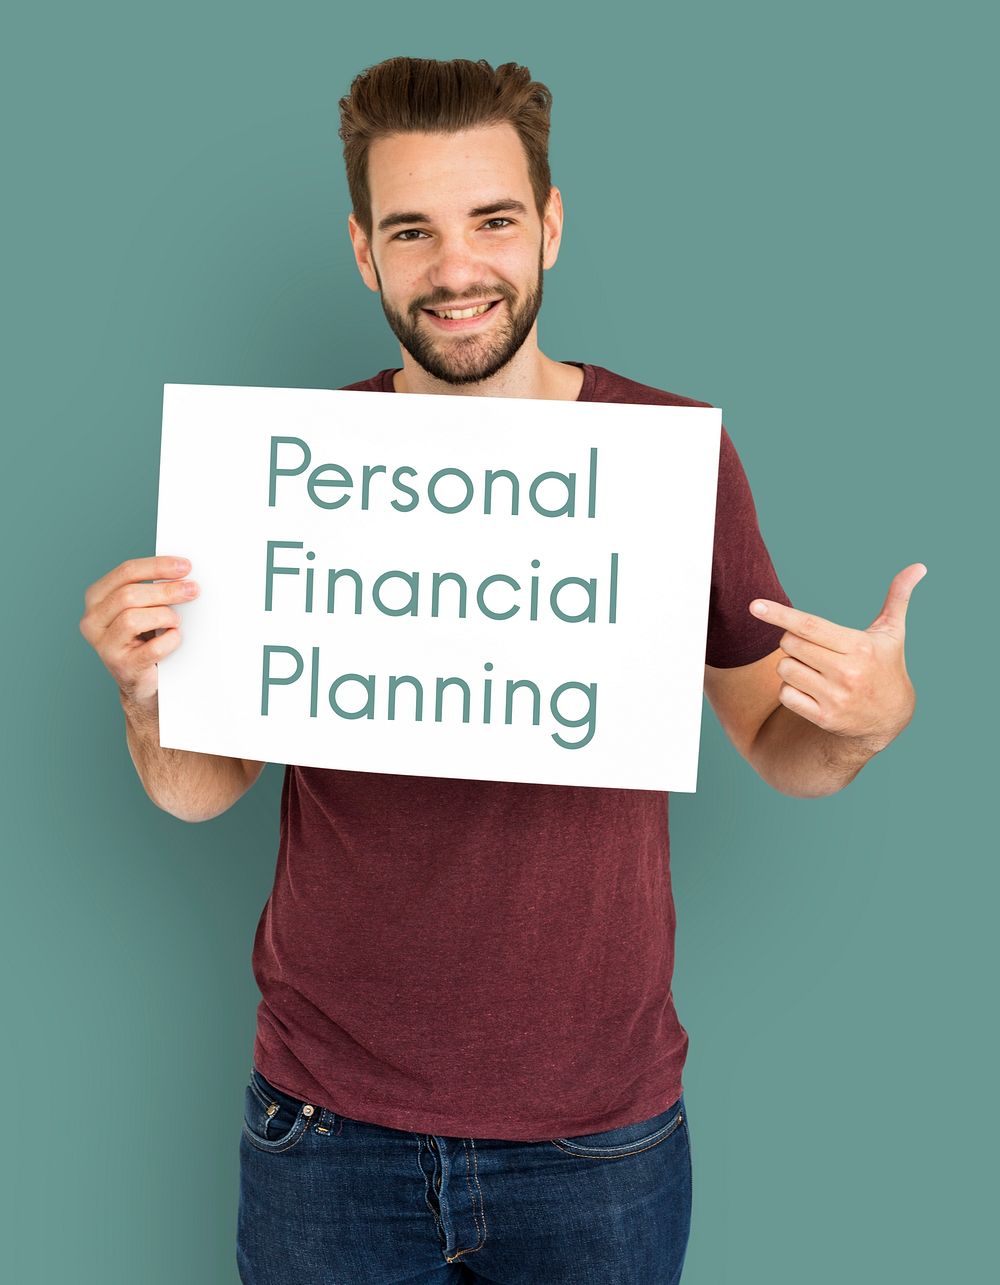 Personal Financial Planning Cash Flow